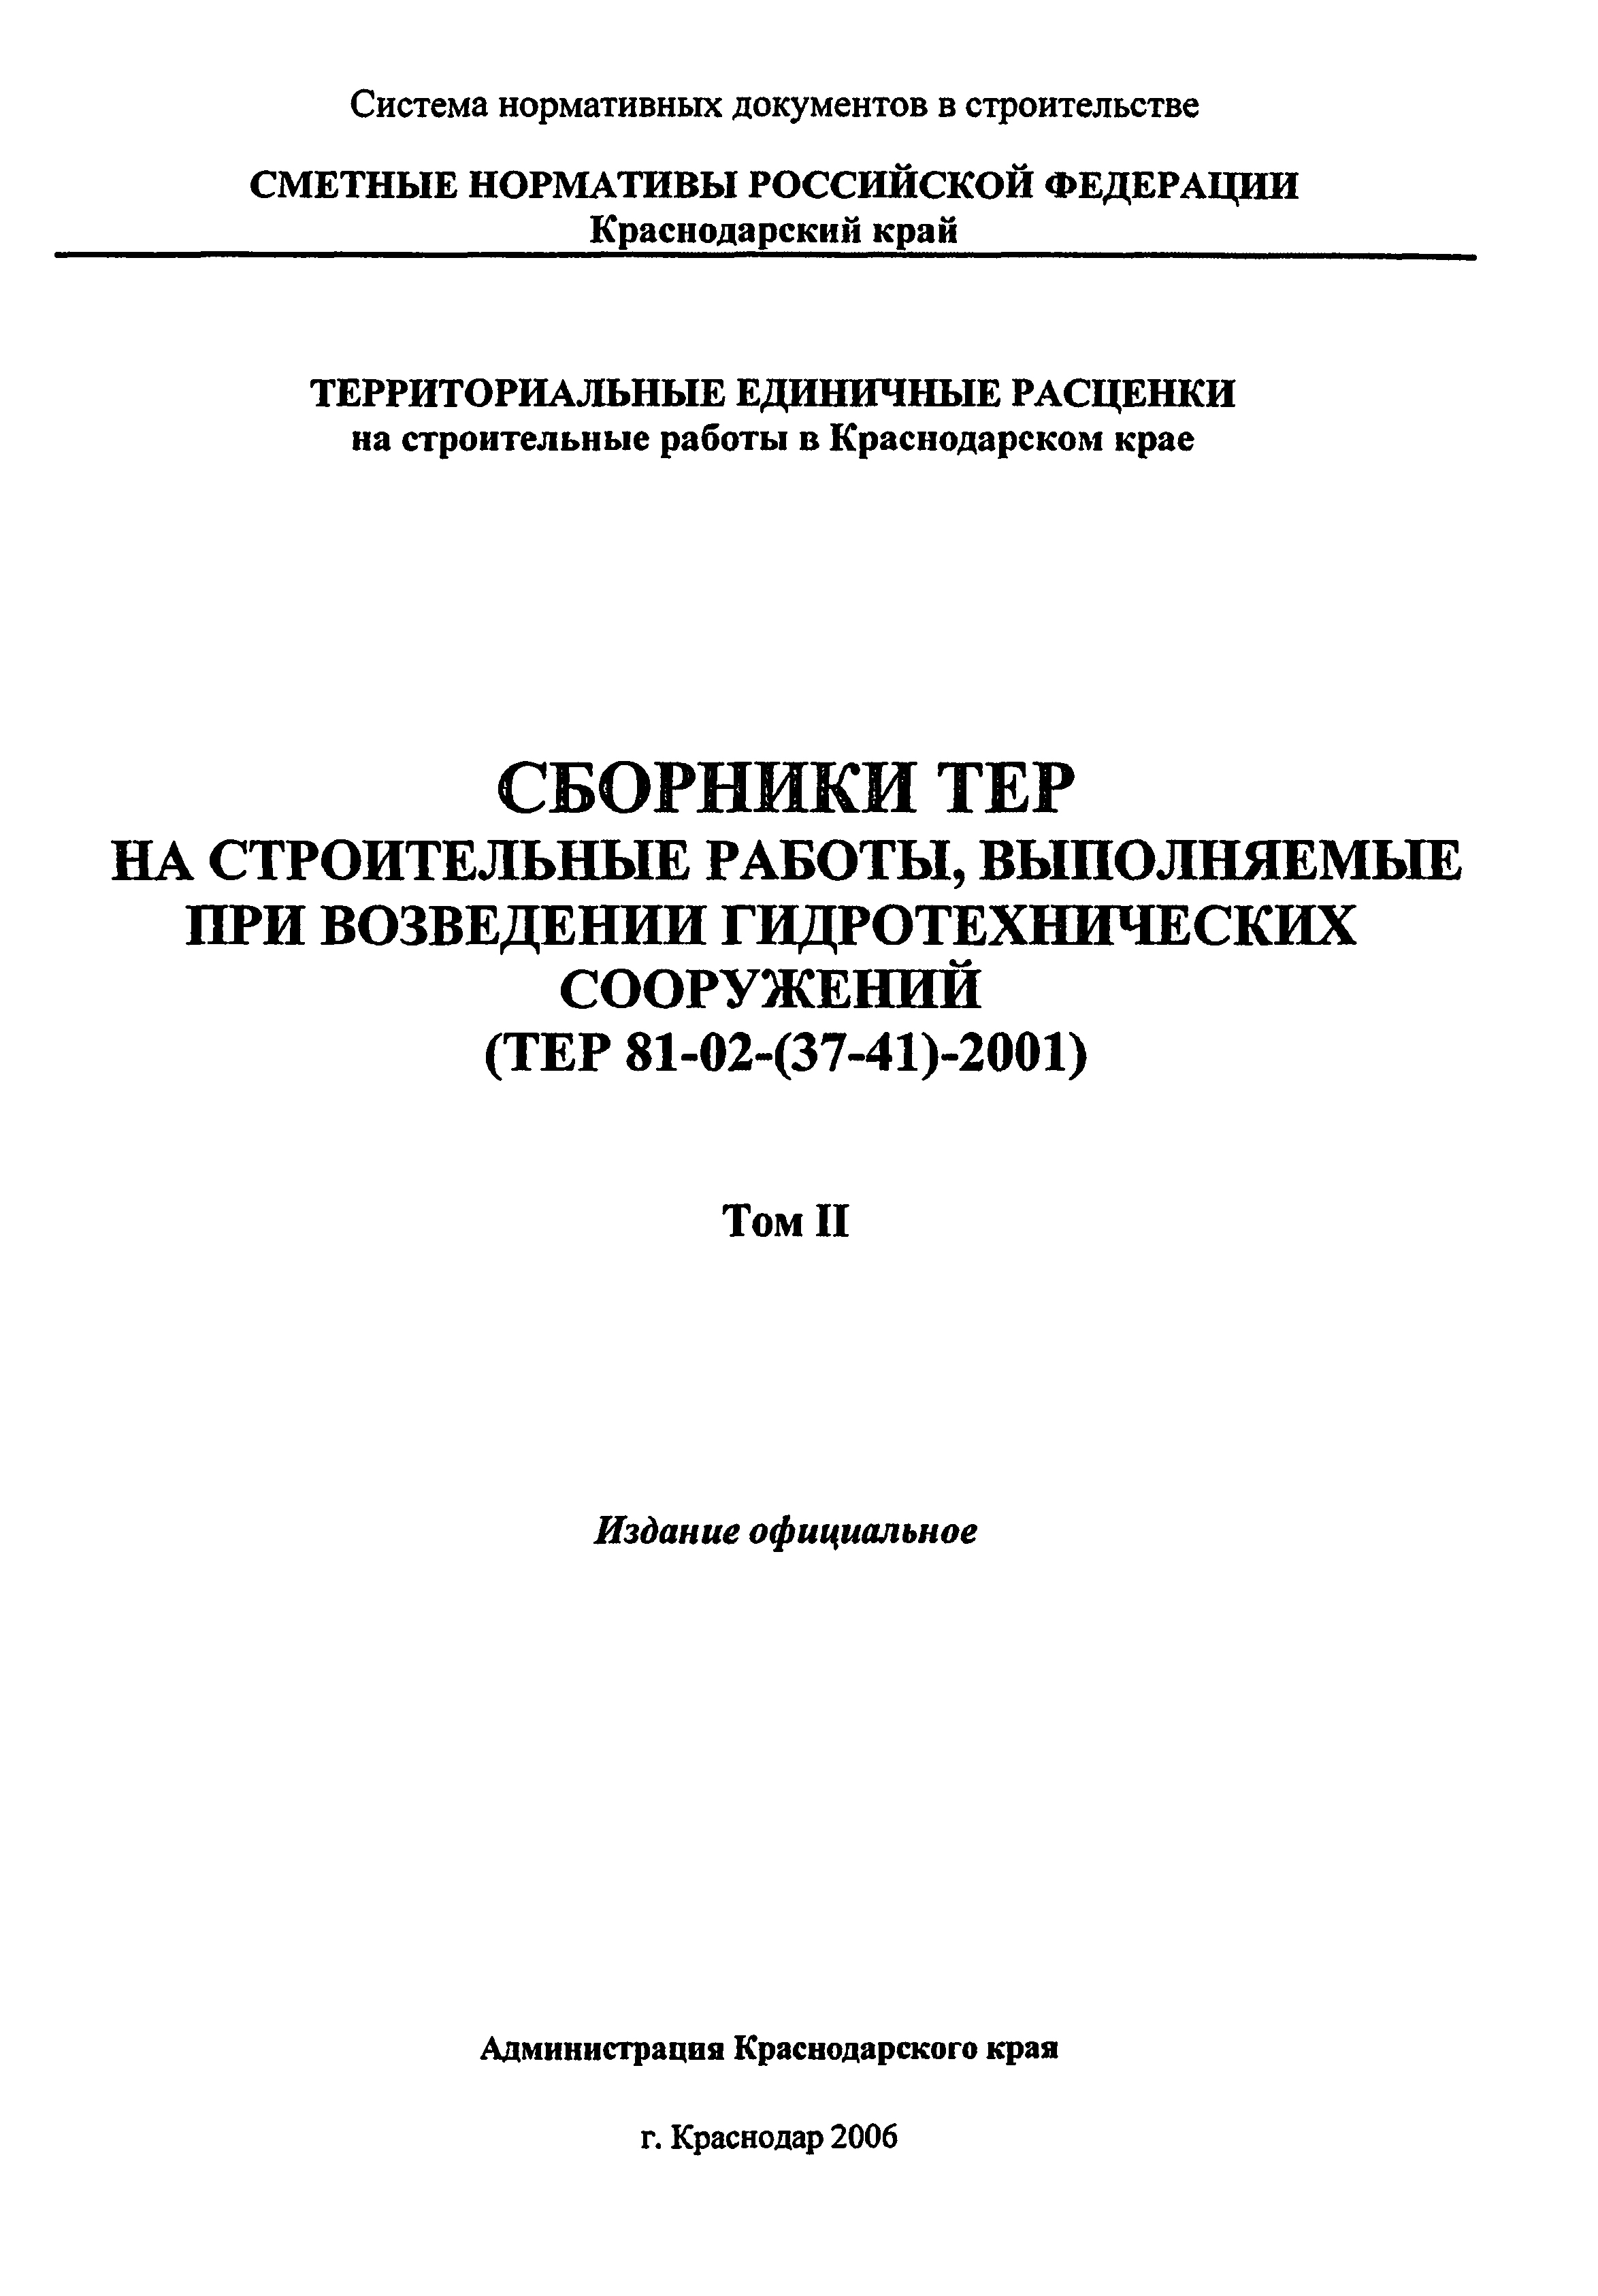 ТЕР Краснодарского края 2001-40